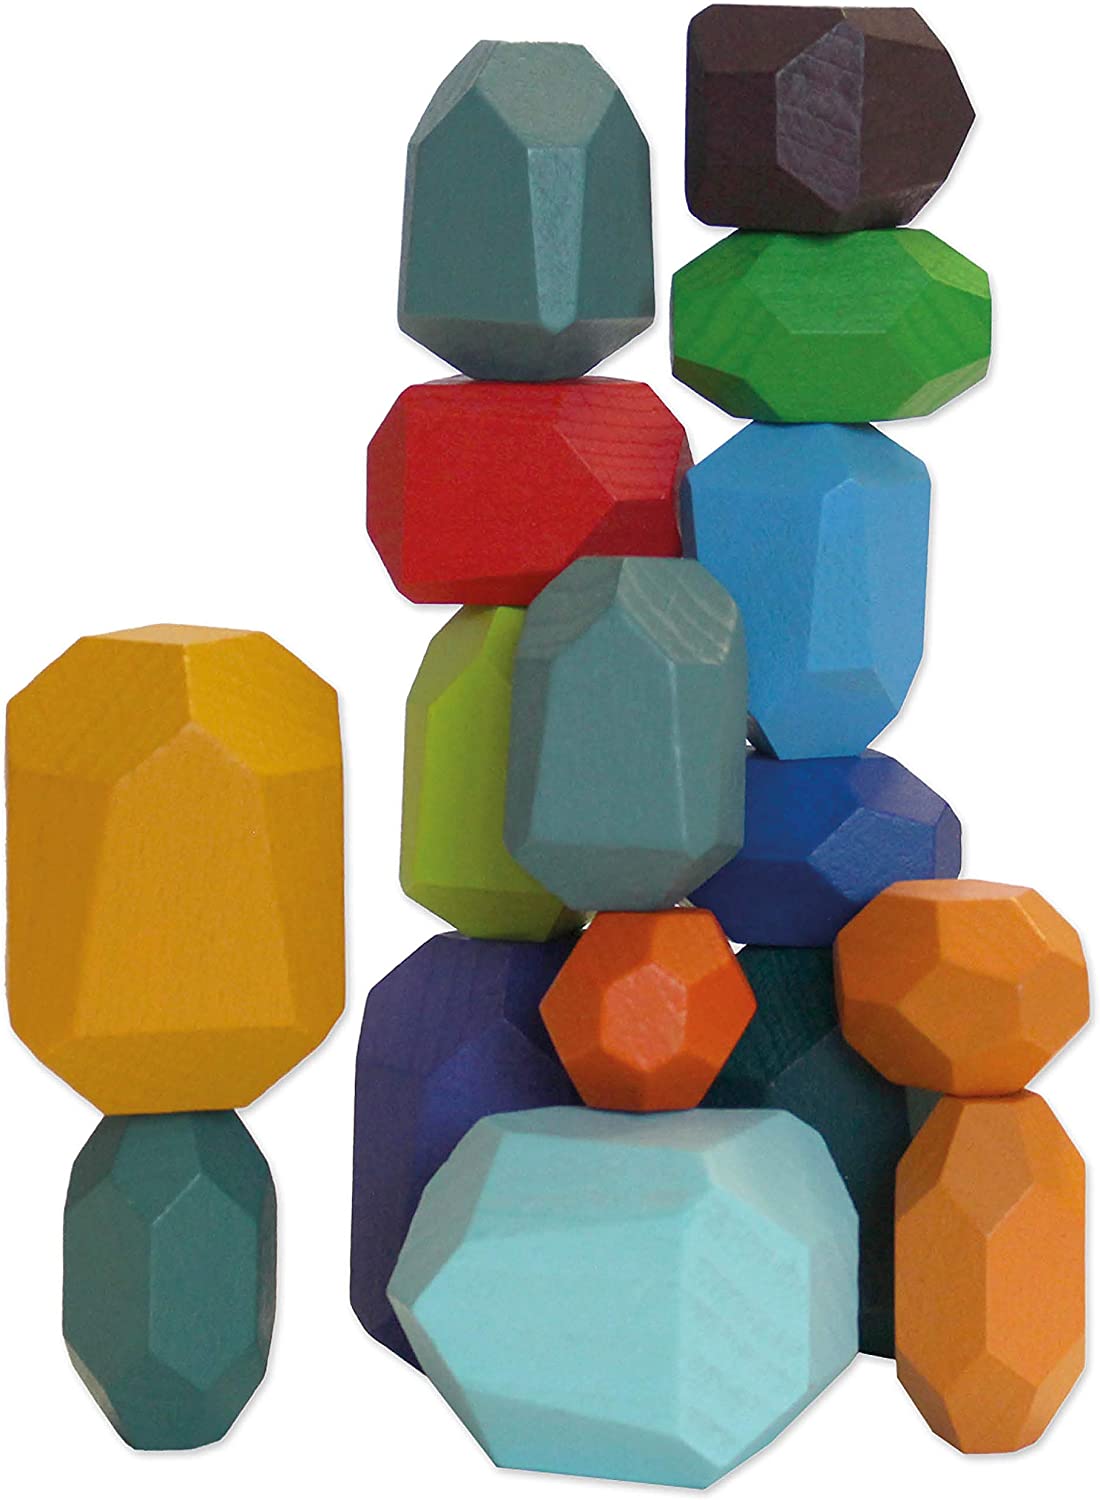 Balancier Stones Set Of 16 | Meditation Stones Waldorf Nature Toy Promotes 